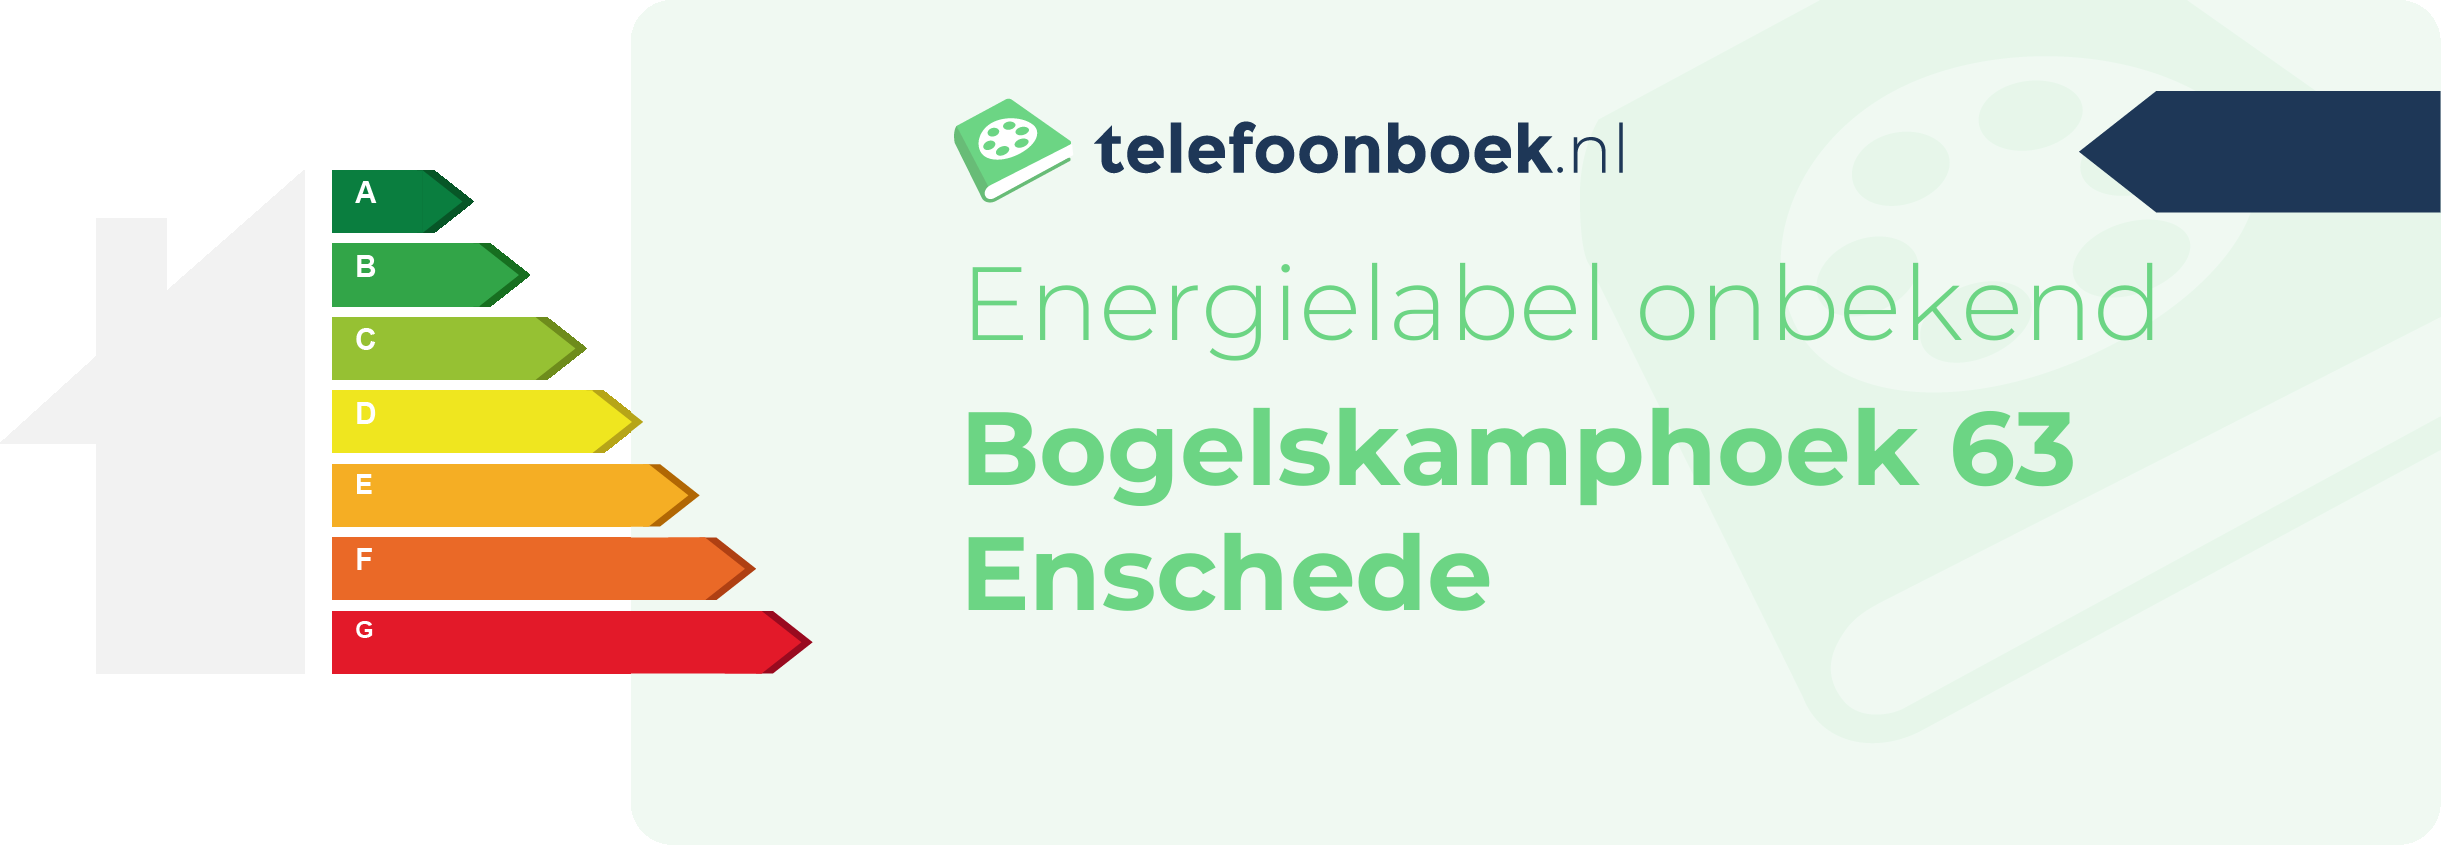 Energielabel Bogelskamphoek 63 Enschede